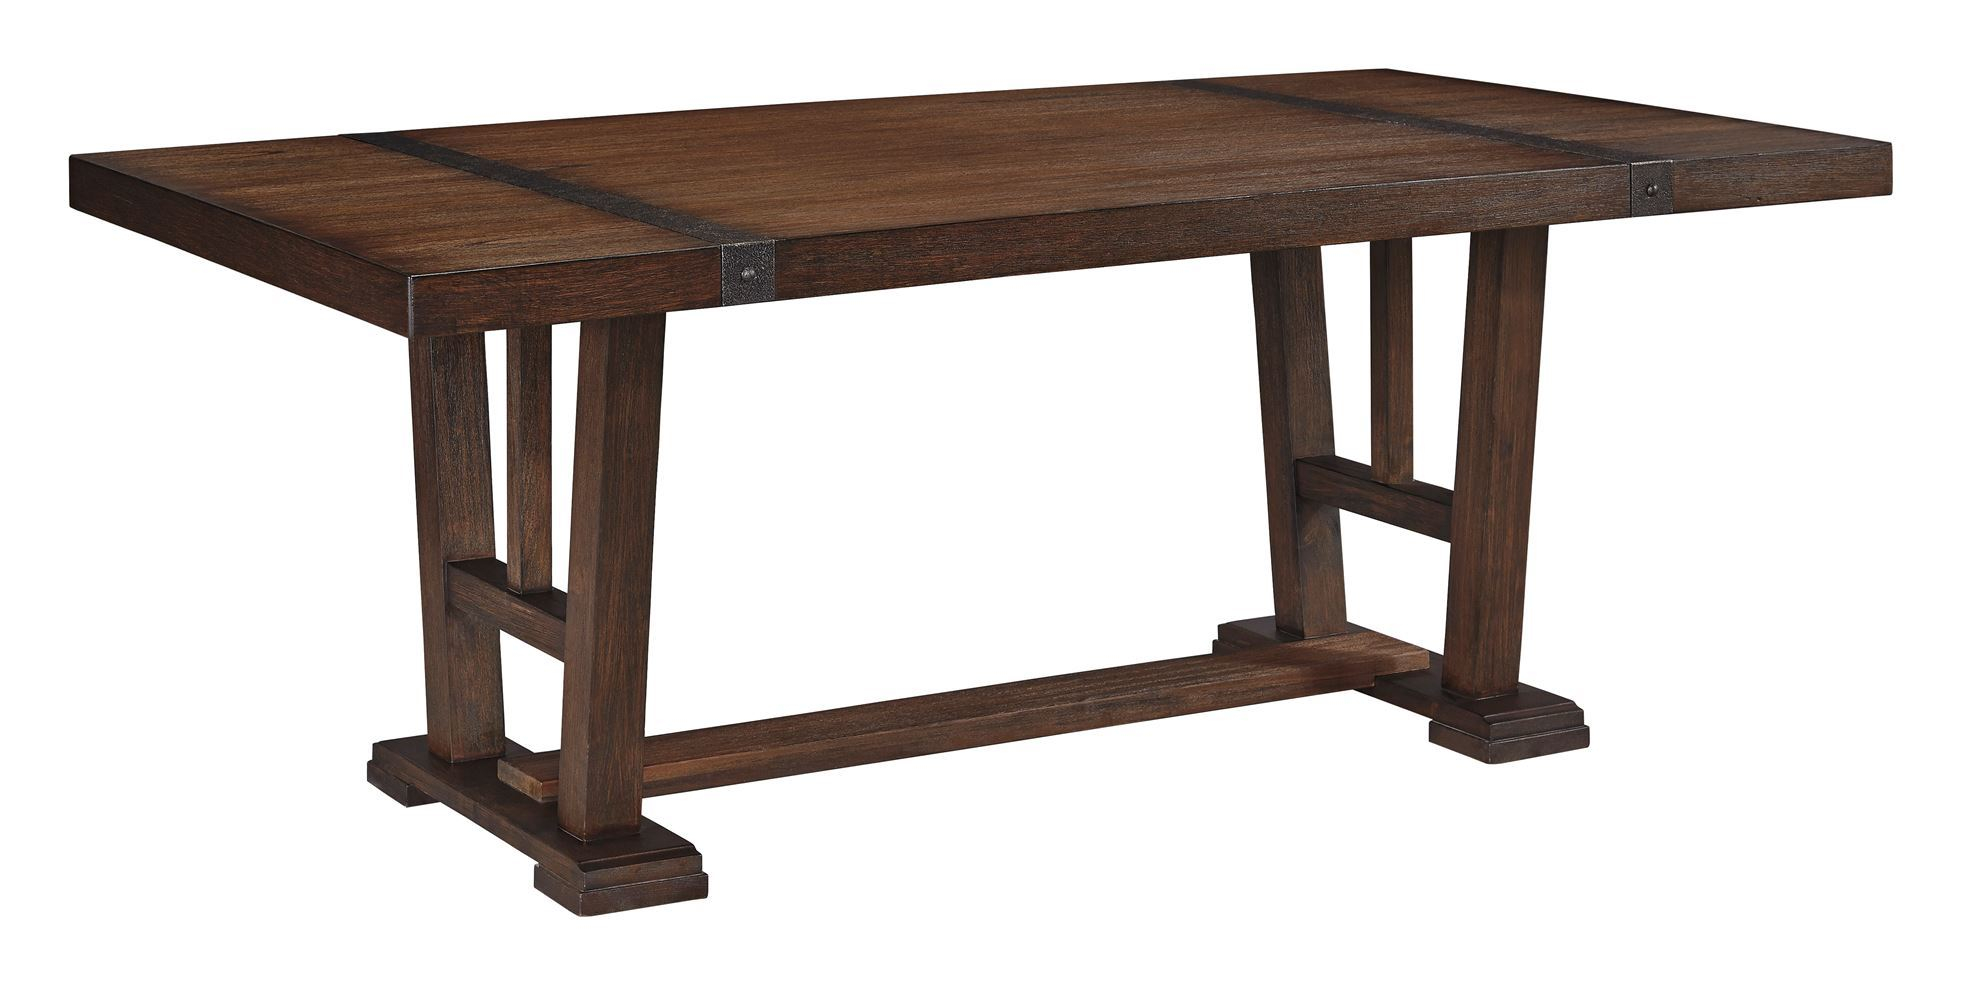 dlarge rectangular dining room table